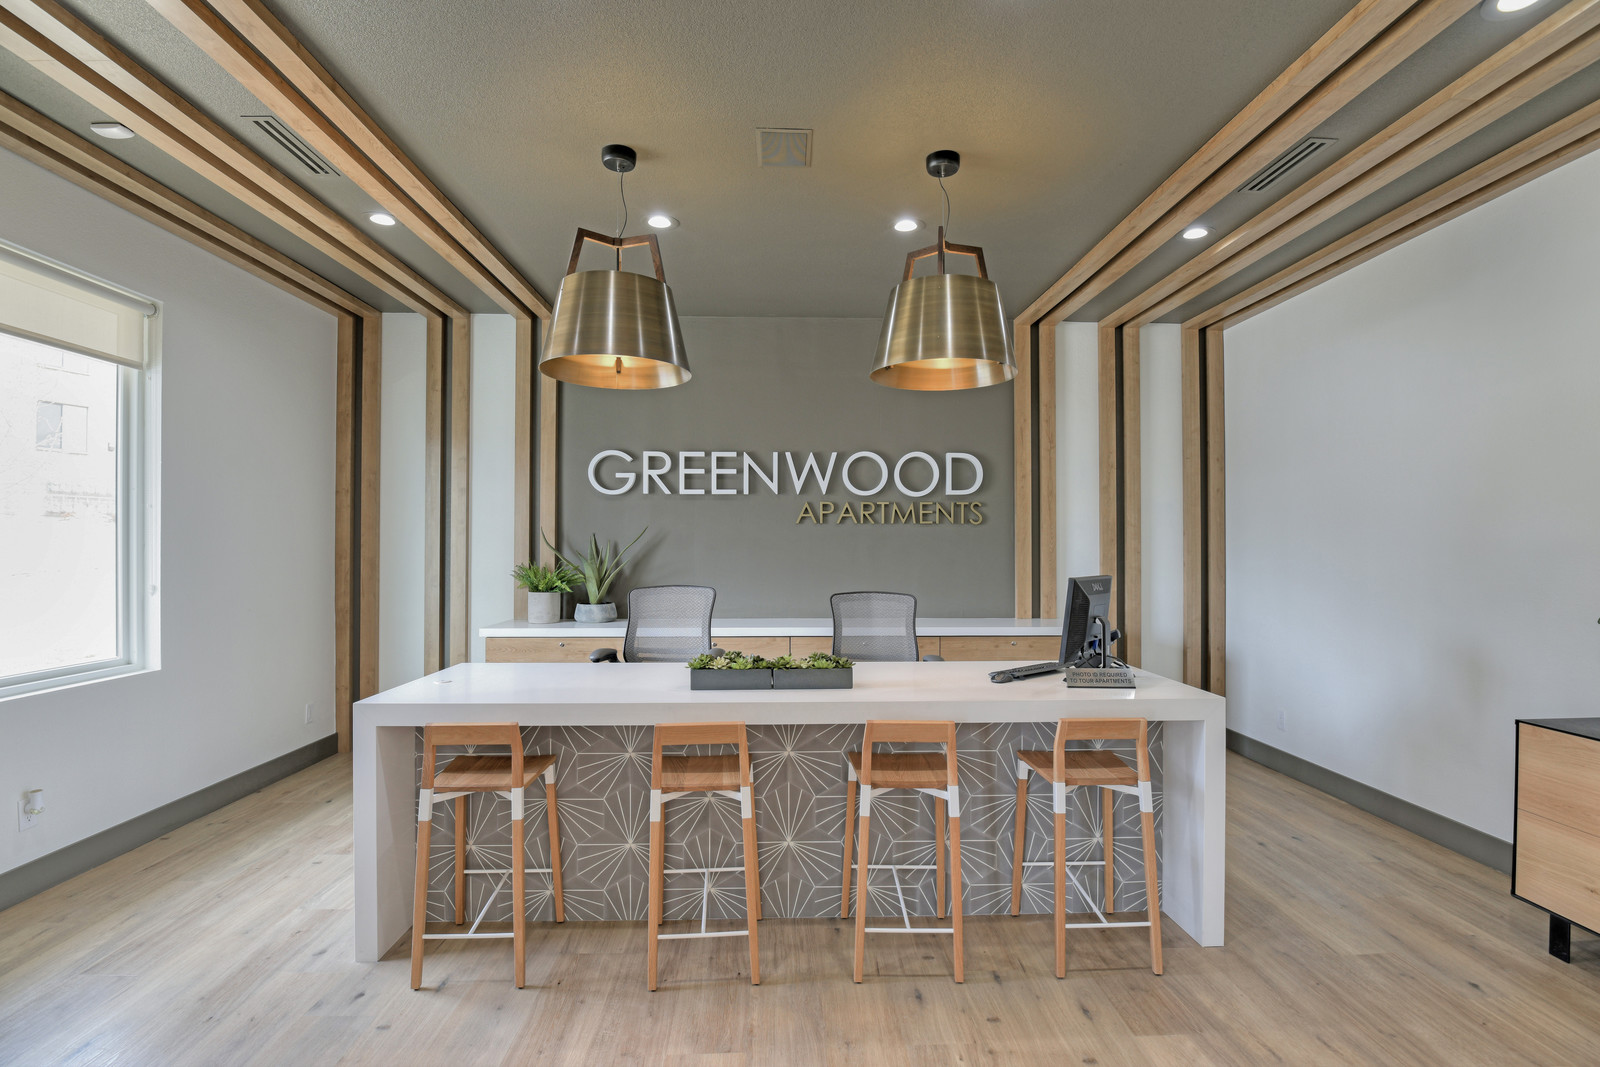 Greenwood Apartments reception desk